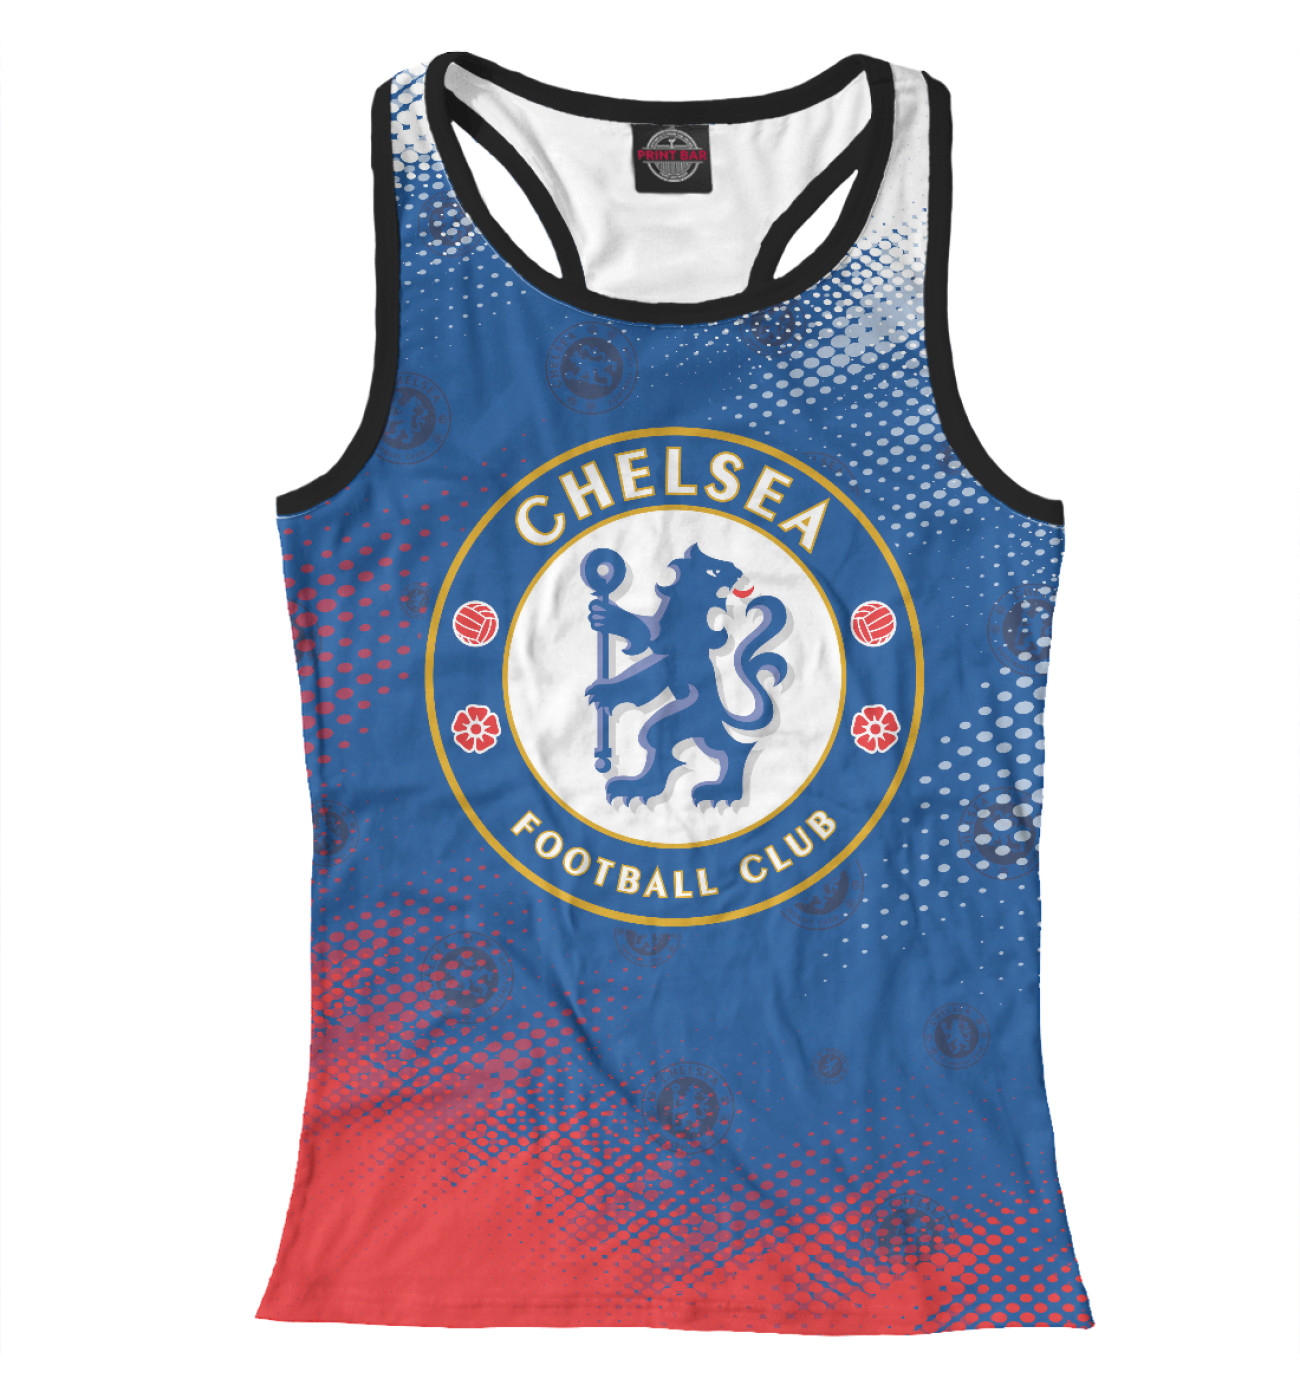 Женская Борцовка Chelsea F.C. / Челси, артикул: CHL-539187-mayb-1